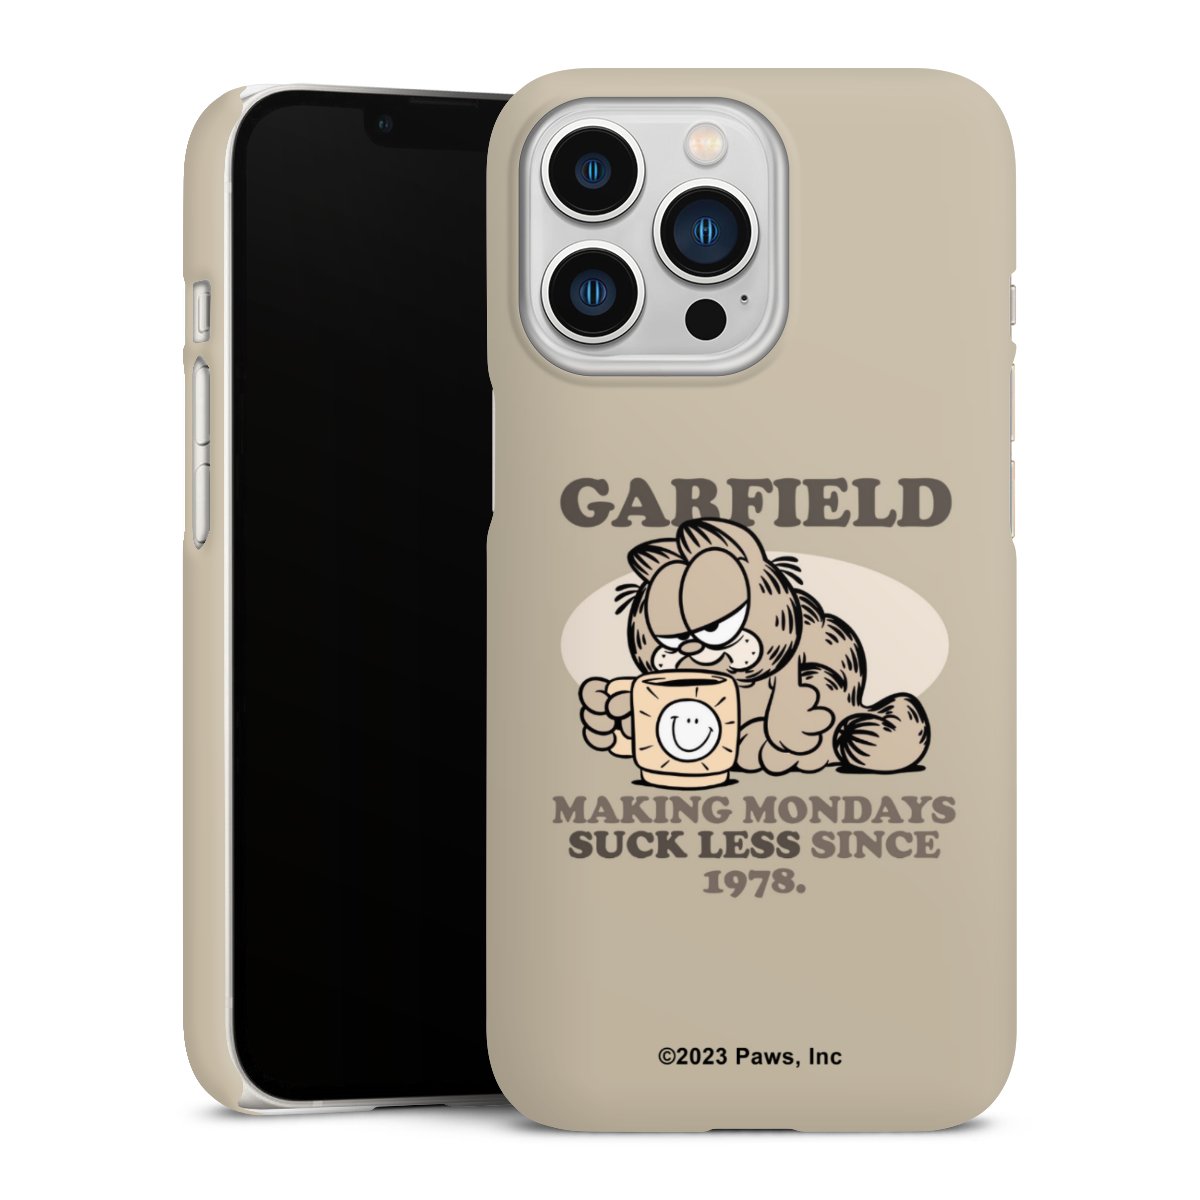 Garfield Brown